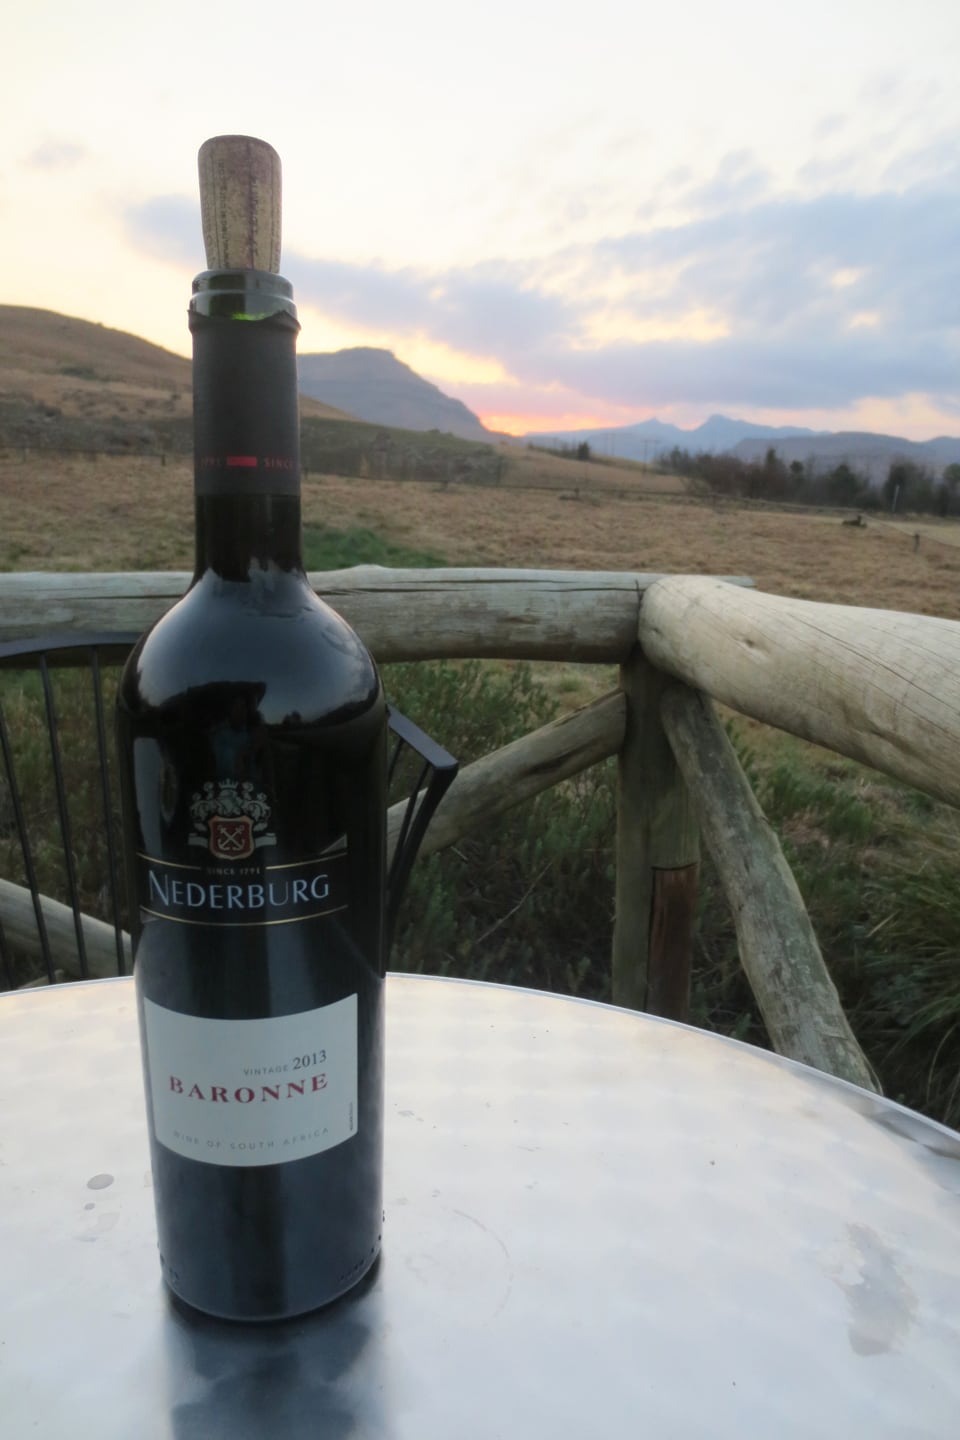 Nederbuig Baronne wine in South Africa